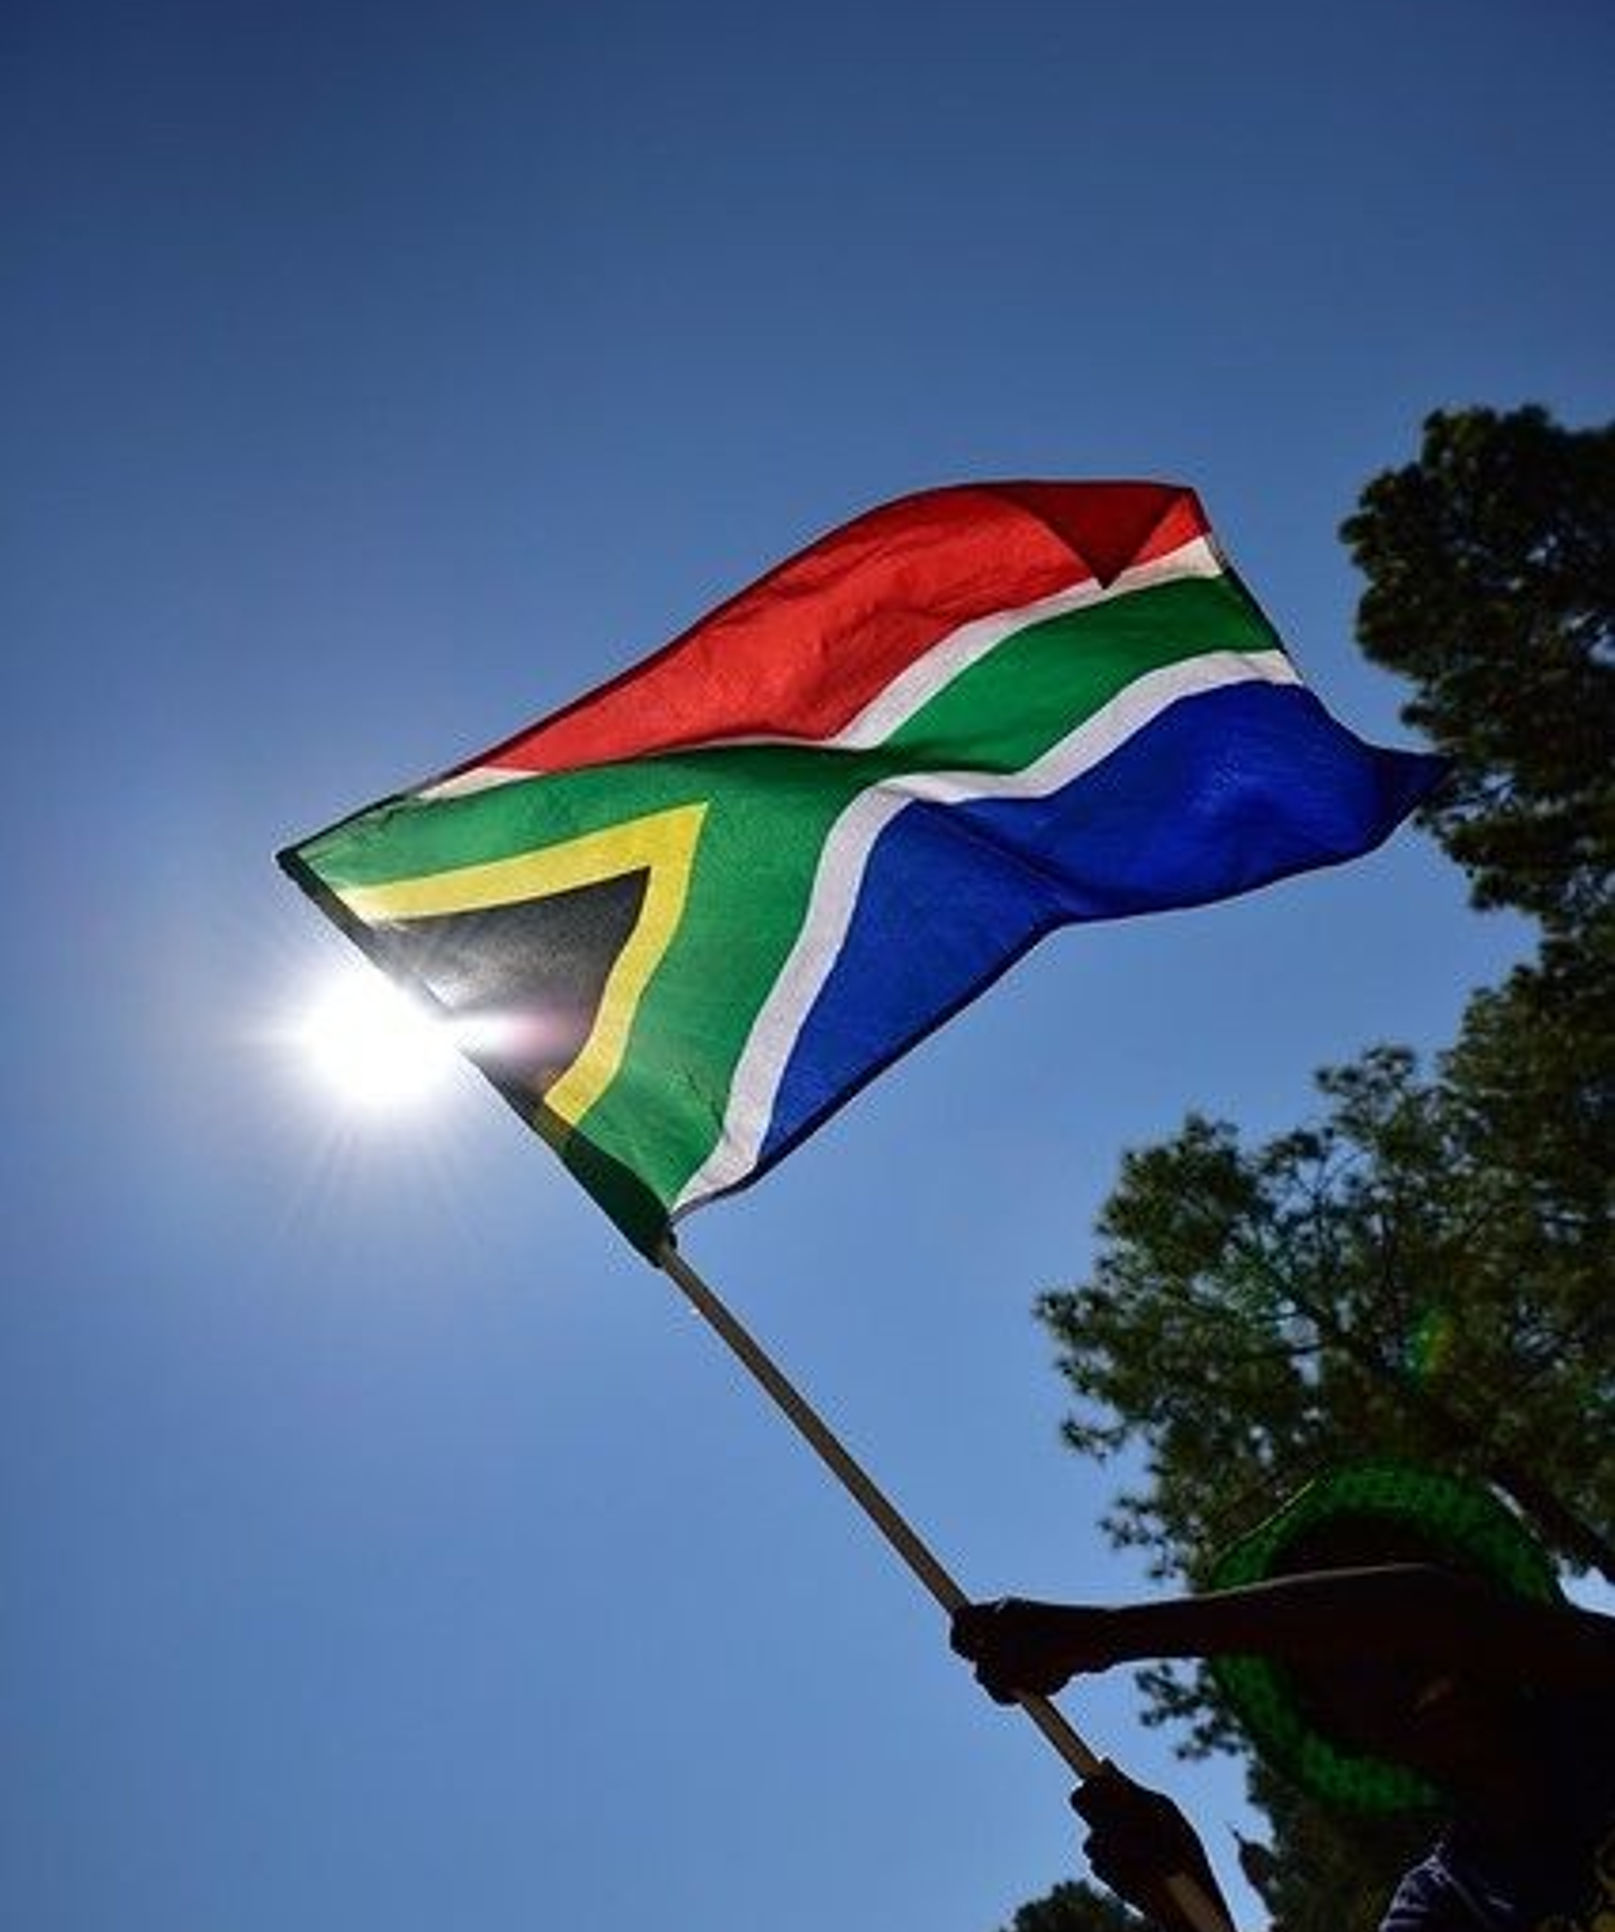 South africa flag. South Africa флаг. Флаг Южно-африканской Республики. ЮАР Flag. Флаг Южной Африки.